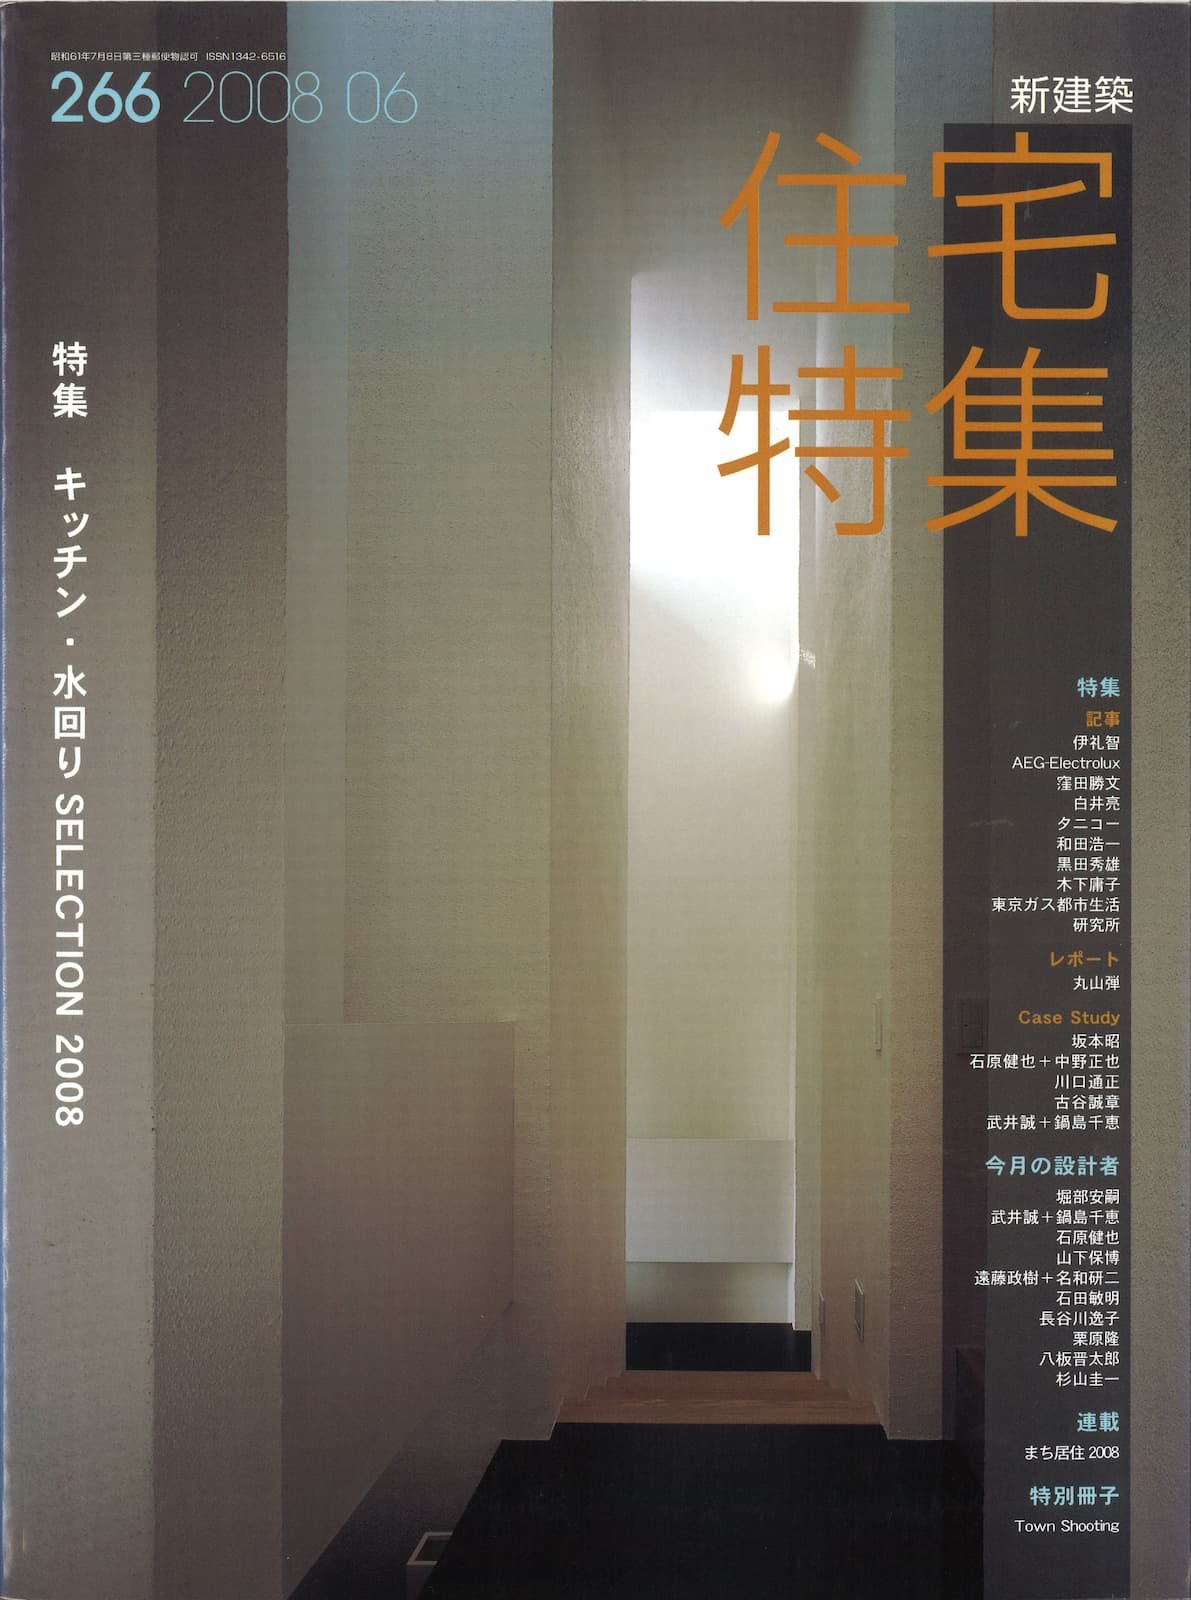 住宅特集 - Housing Special Feature 266 - ICH_Page_1.jpg